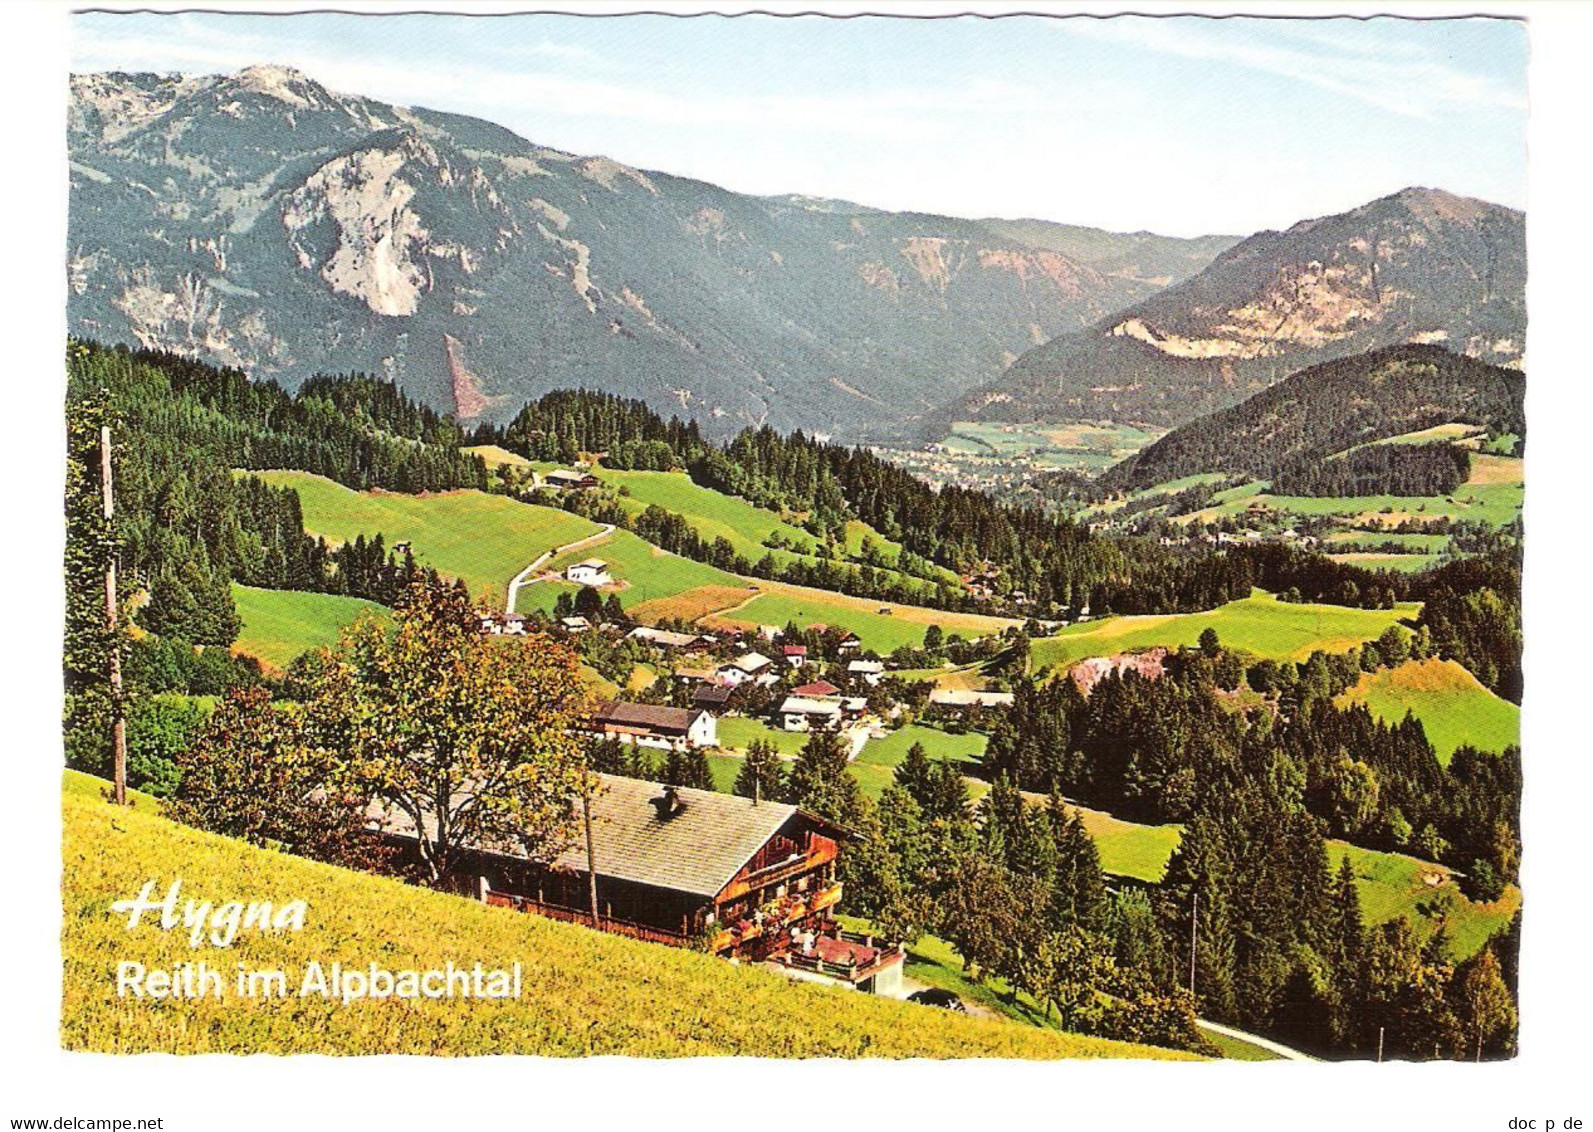 Osterreich - Hygna Reith Bei Brixlegg - Tirol - Alpbachtal - Blick Ins Inntal - Brixlegg